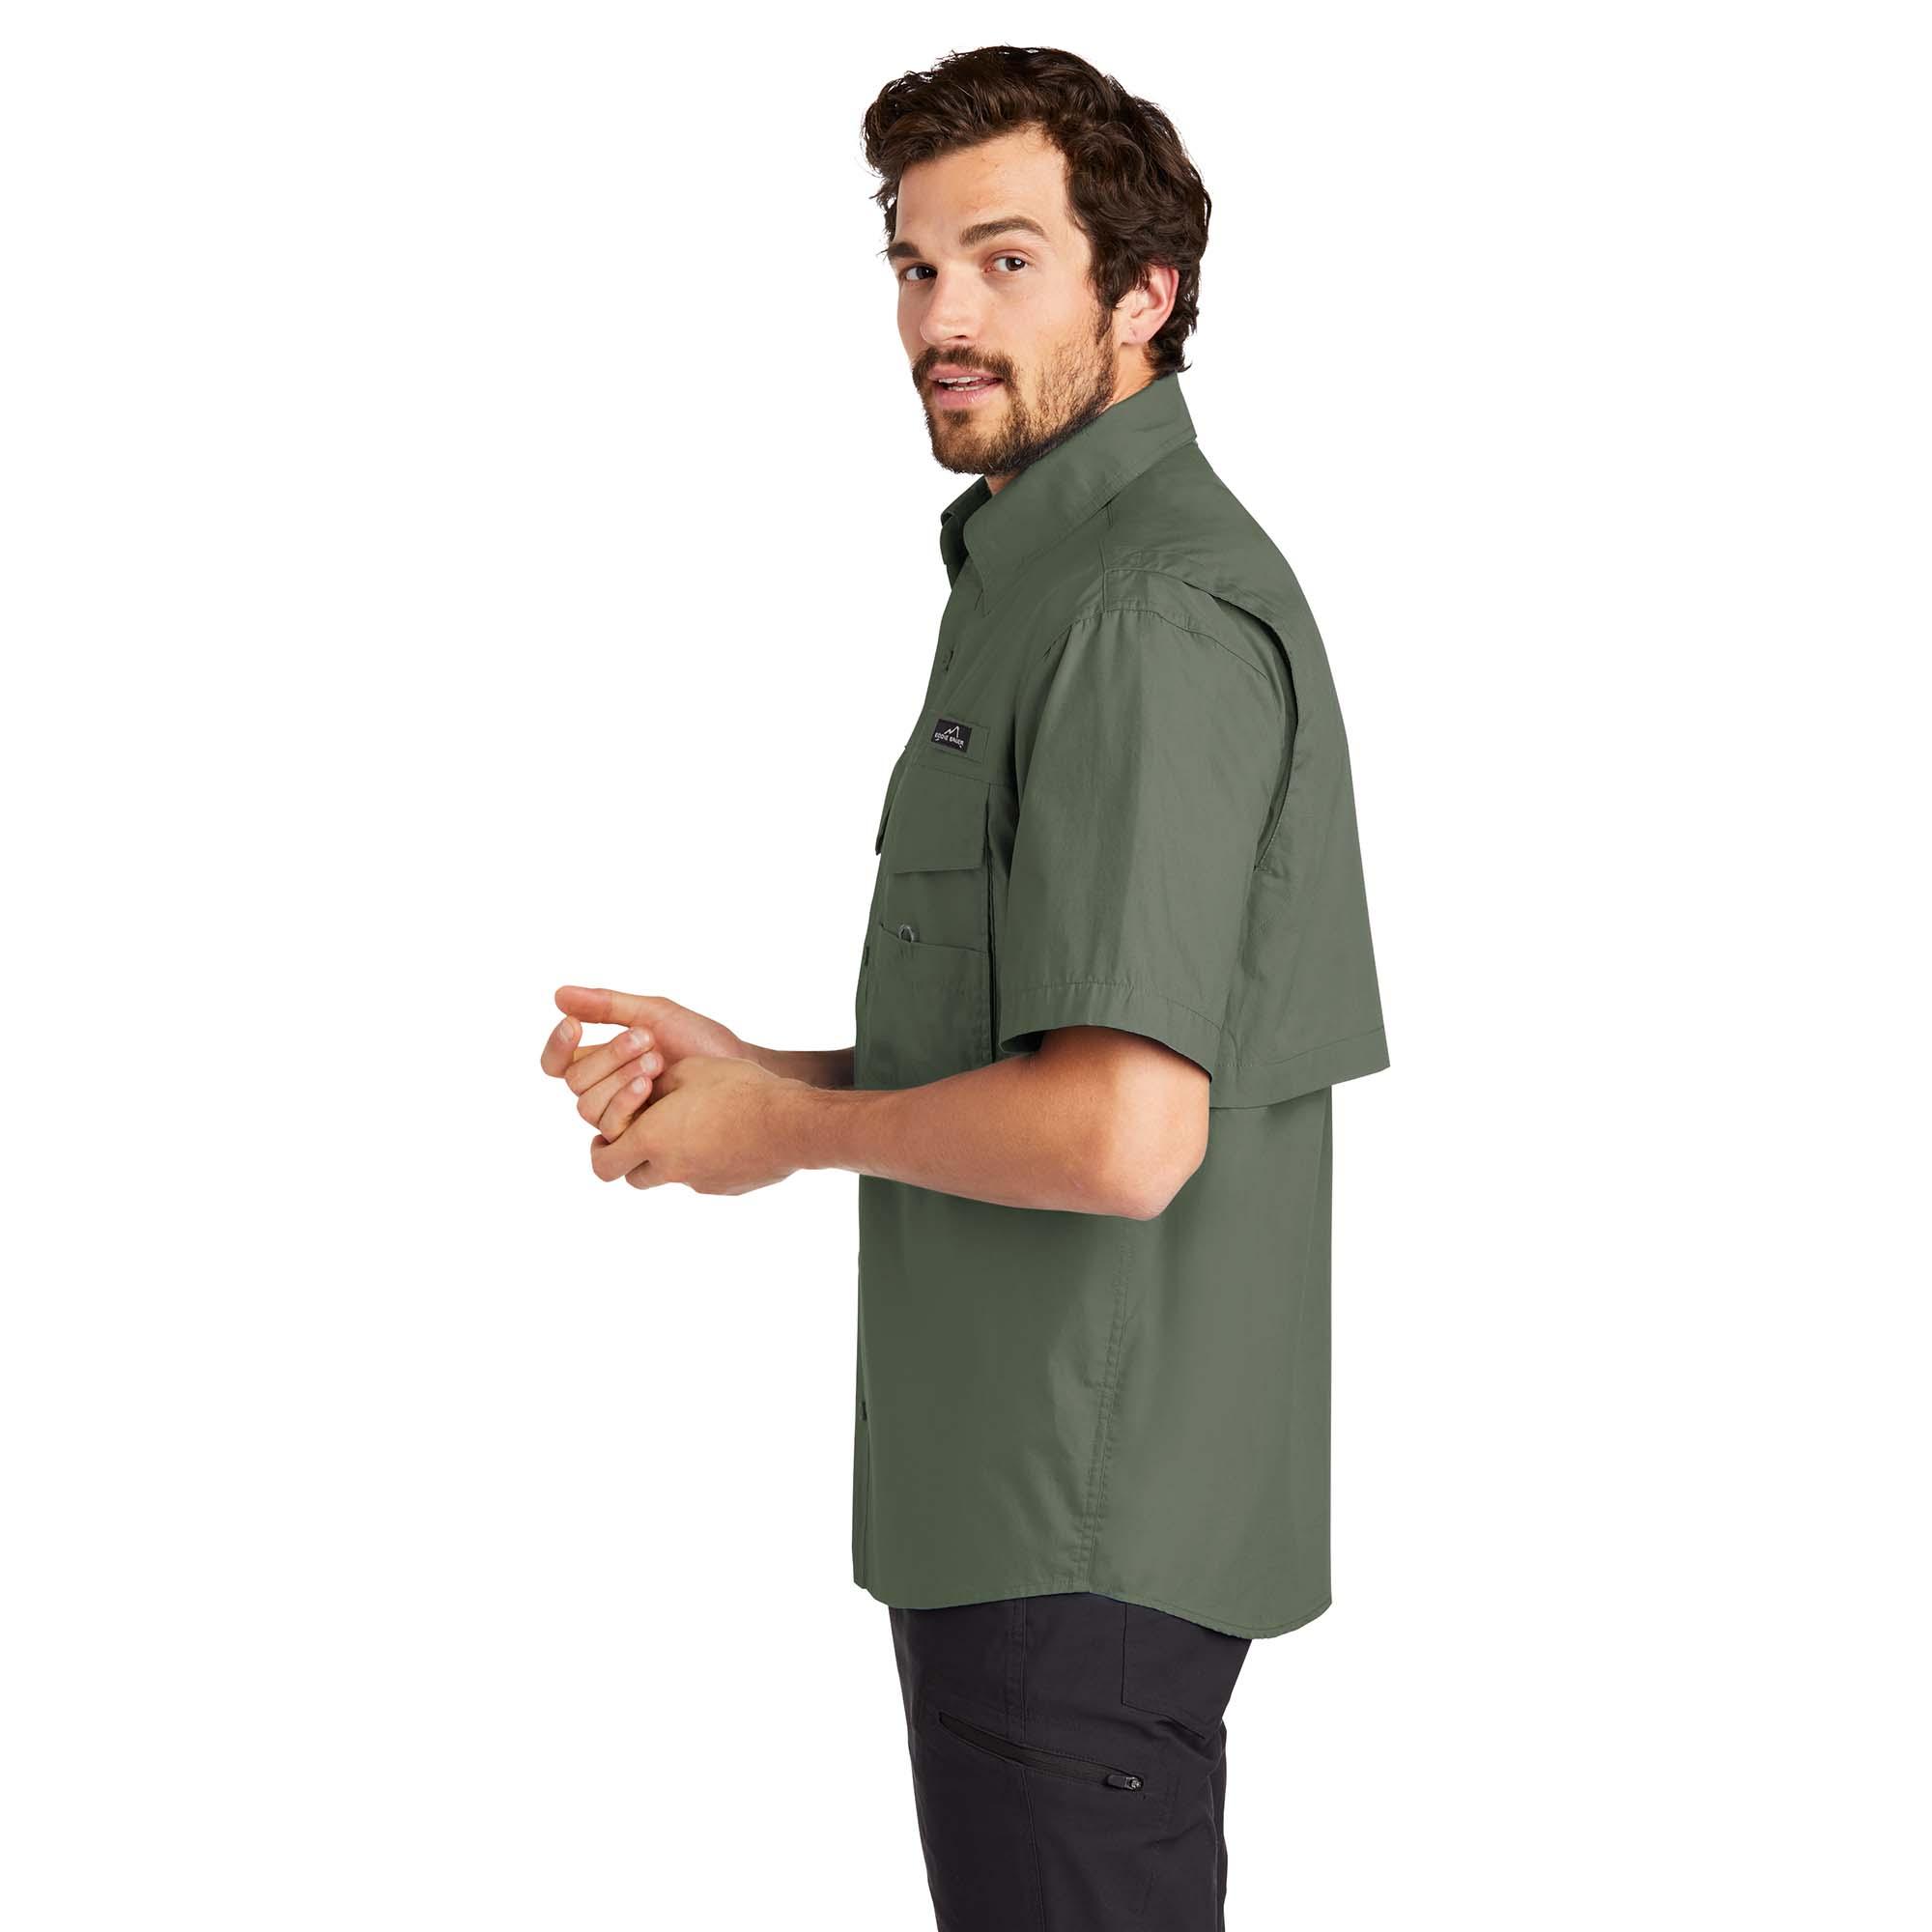 Eddie Bauer EB608 Short Sleeve Fishing Shirt - Seagrass Green